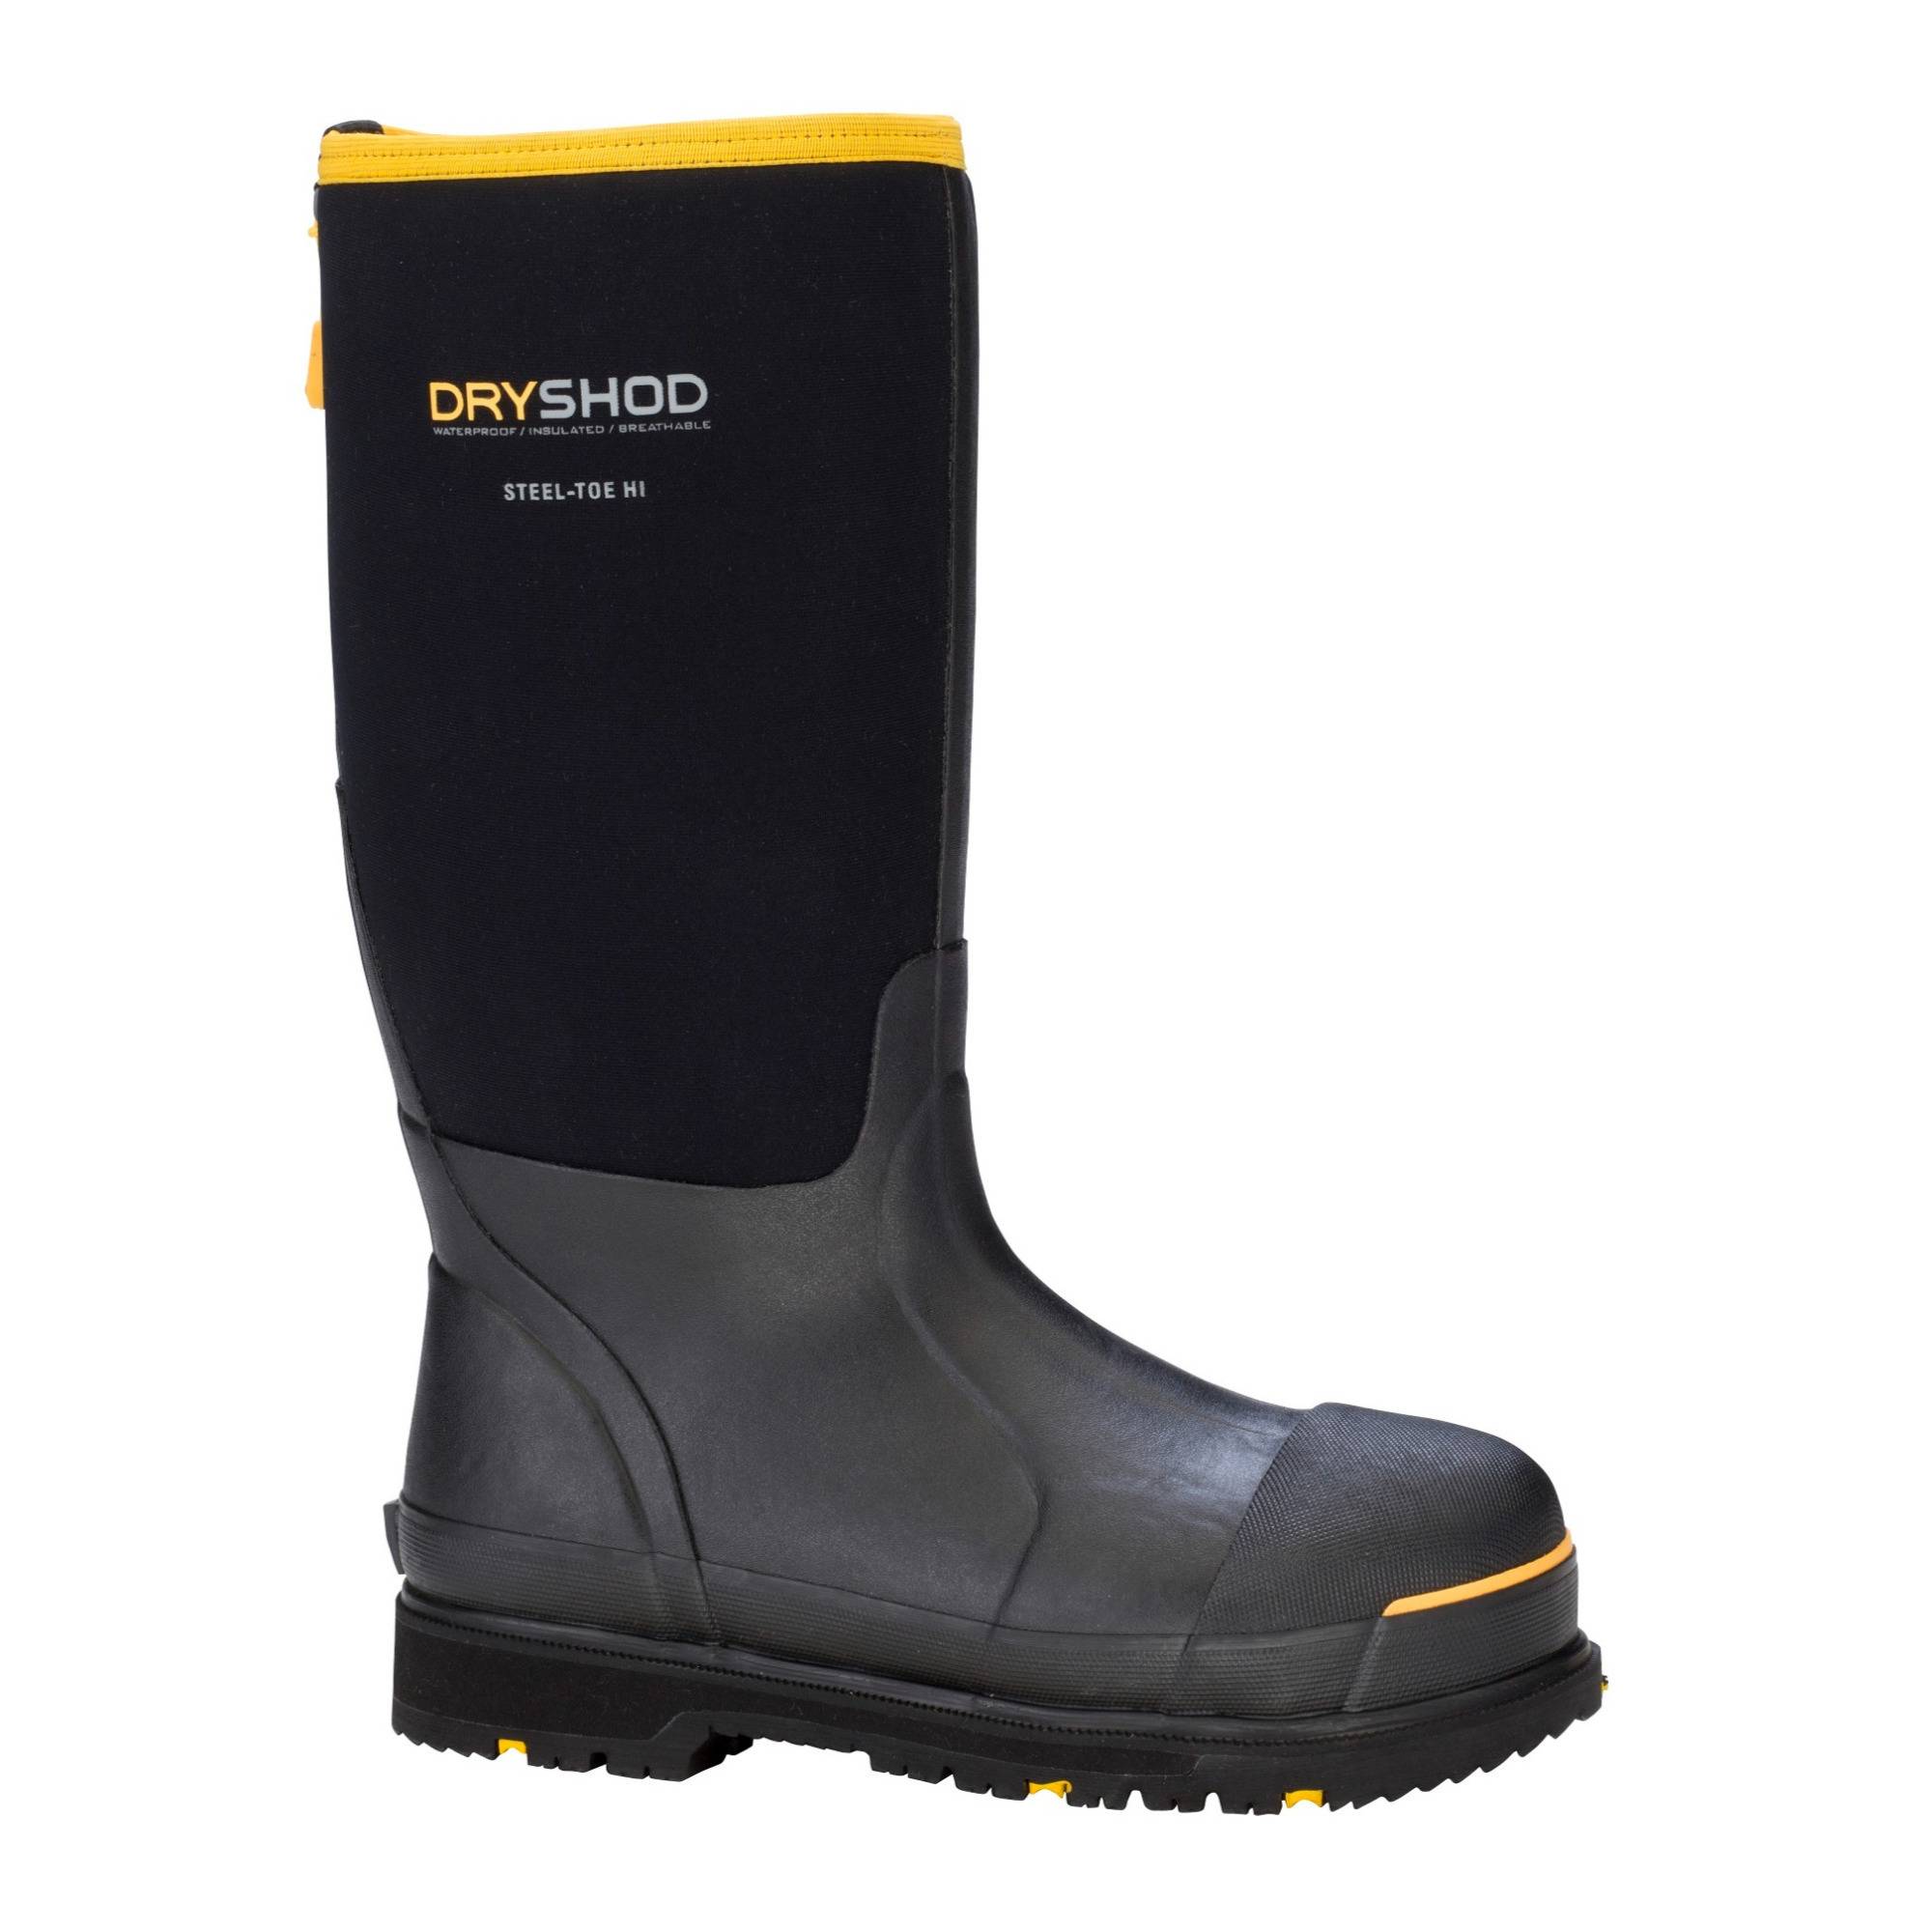 DryShod Steel-Toe Protective Work Boots (Size 14, Hi Cut, Black/Yellow)